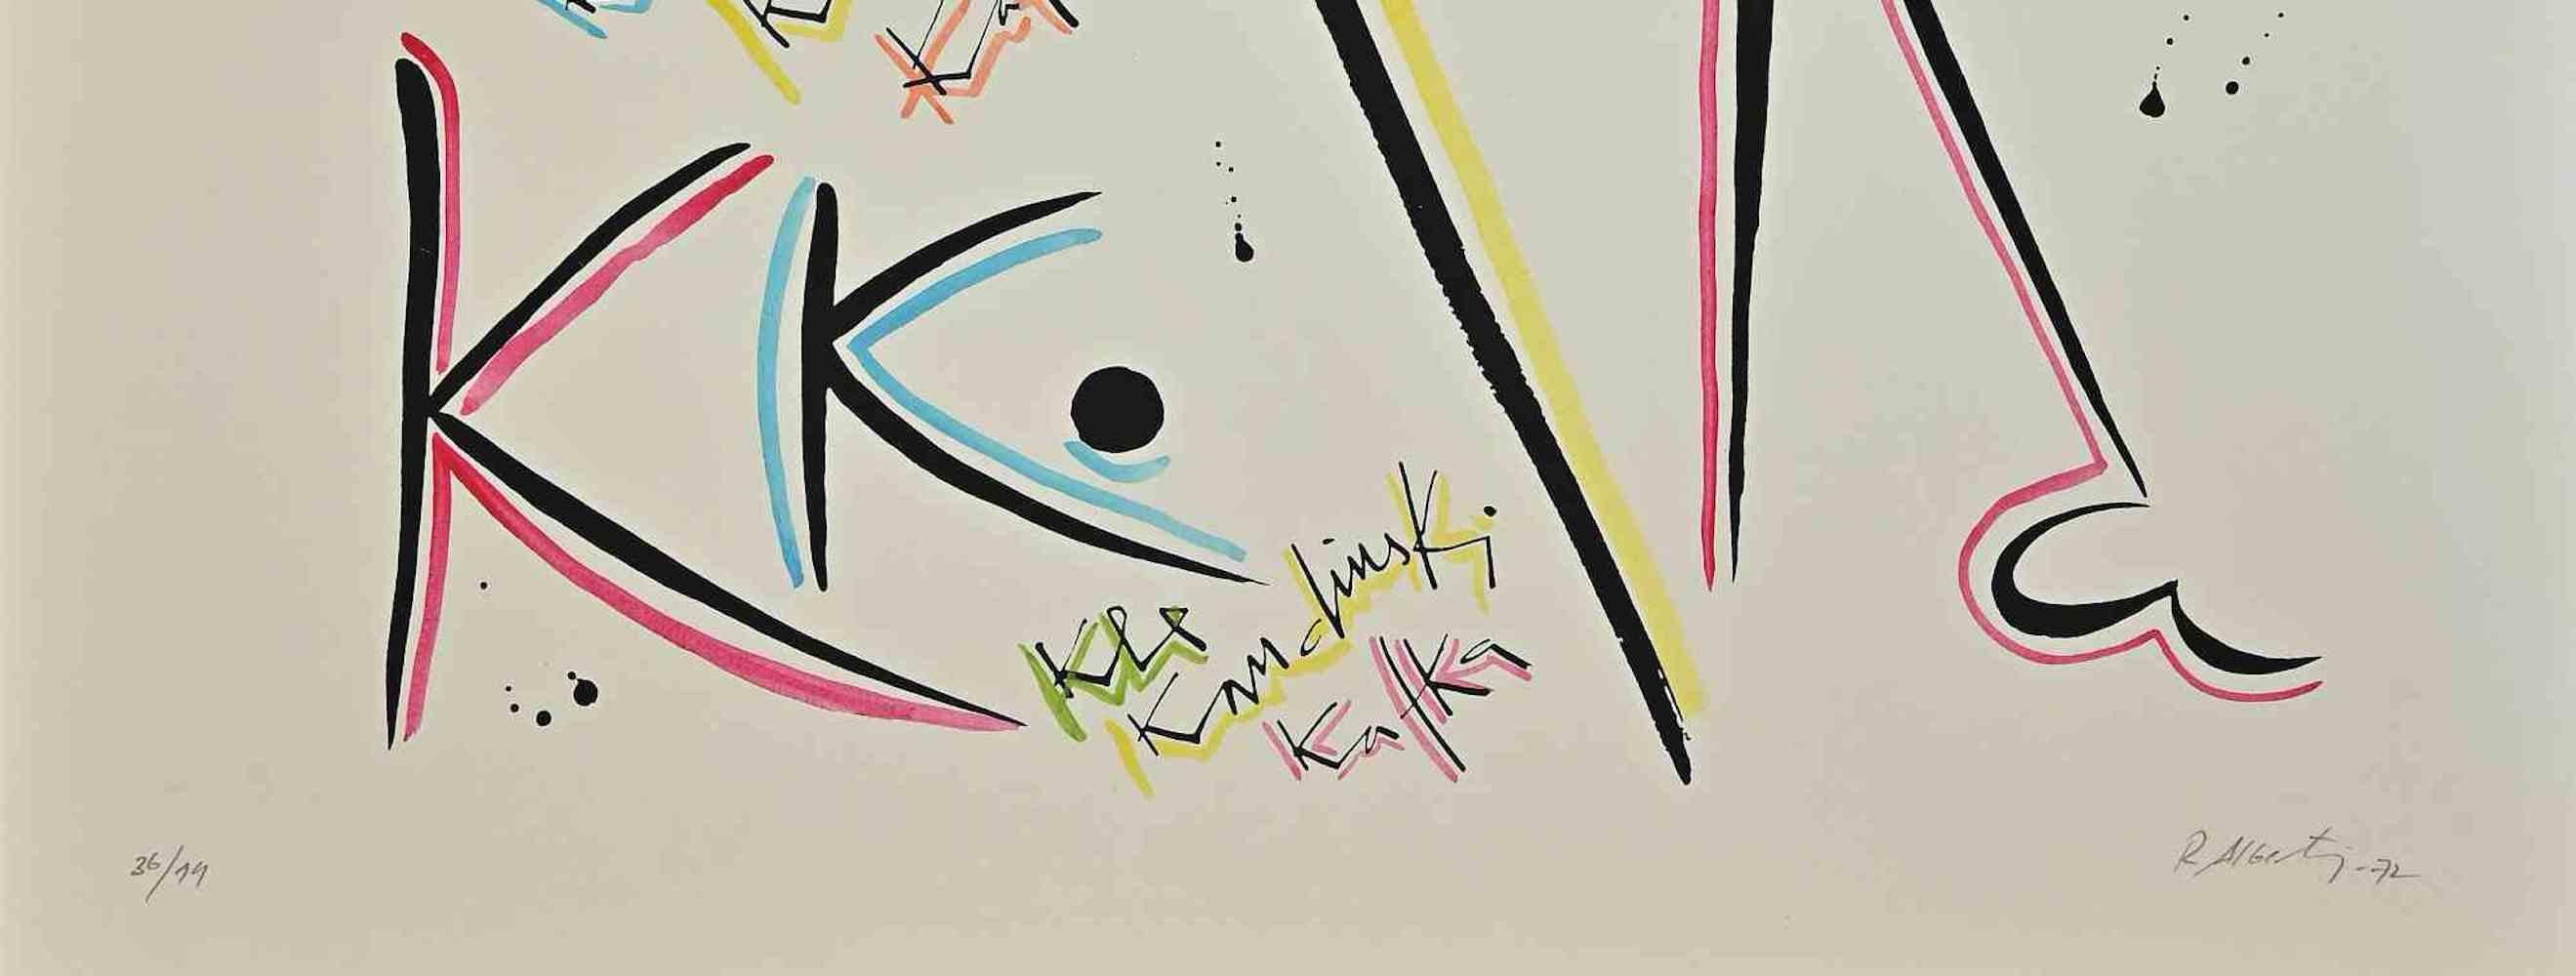 Letter K - Lithograph by Rafael Alberti - 1972 For Sale 1